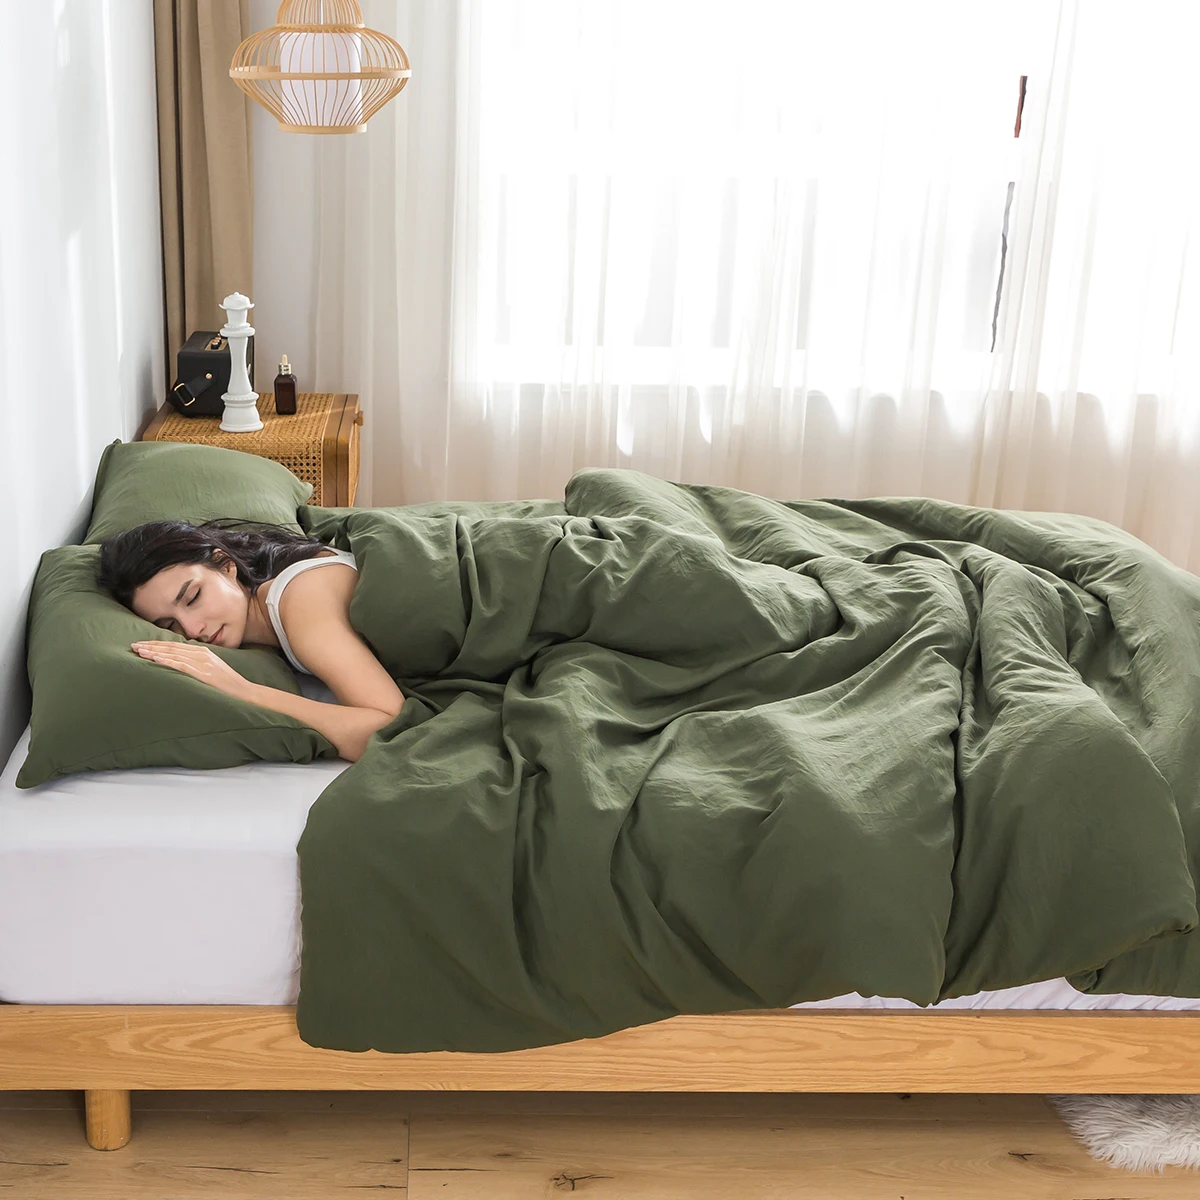 

Bedding comforter set Dark Olive green Queen/Full 88inch*92 inch lightweight Lightweight single bed Ultra-Soft Cozy All Seas